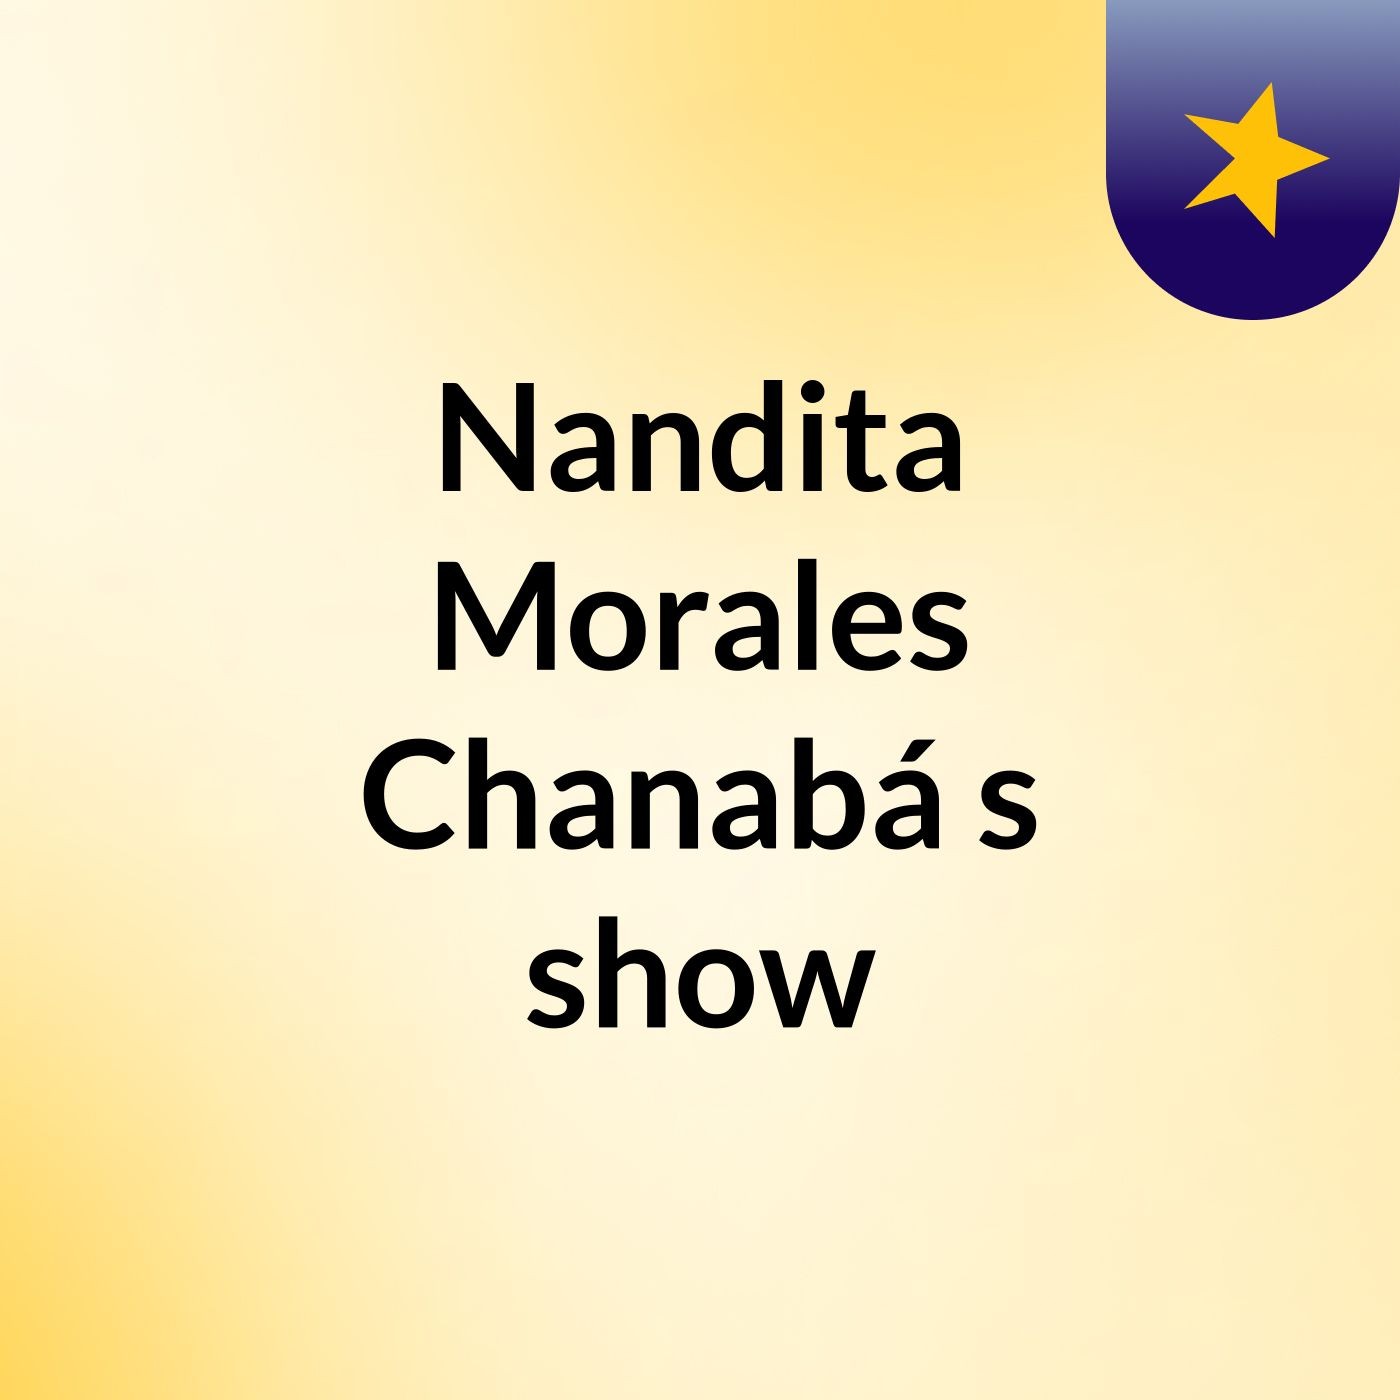 Nandita Morales Chanabá's show